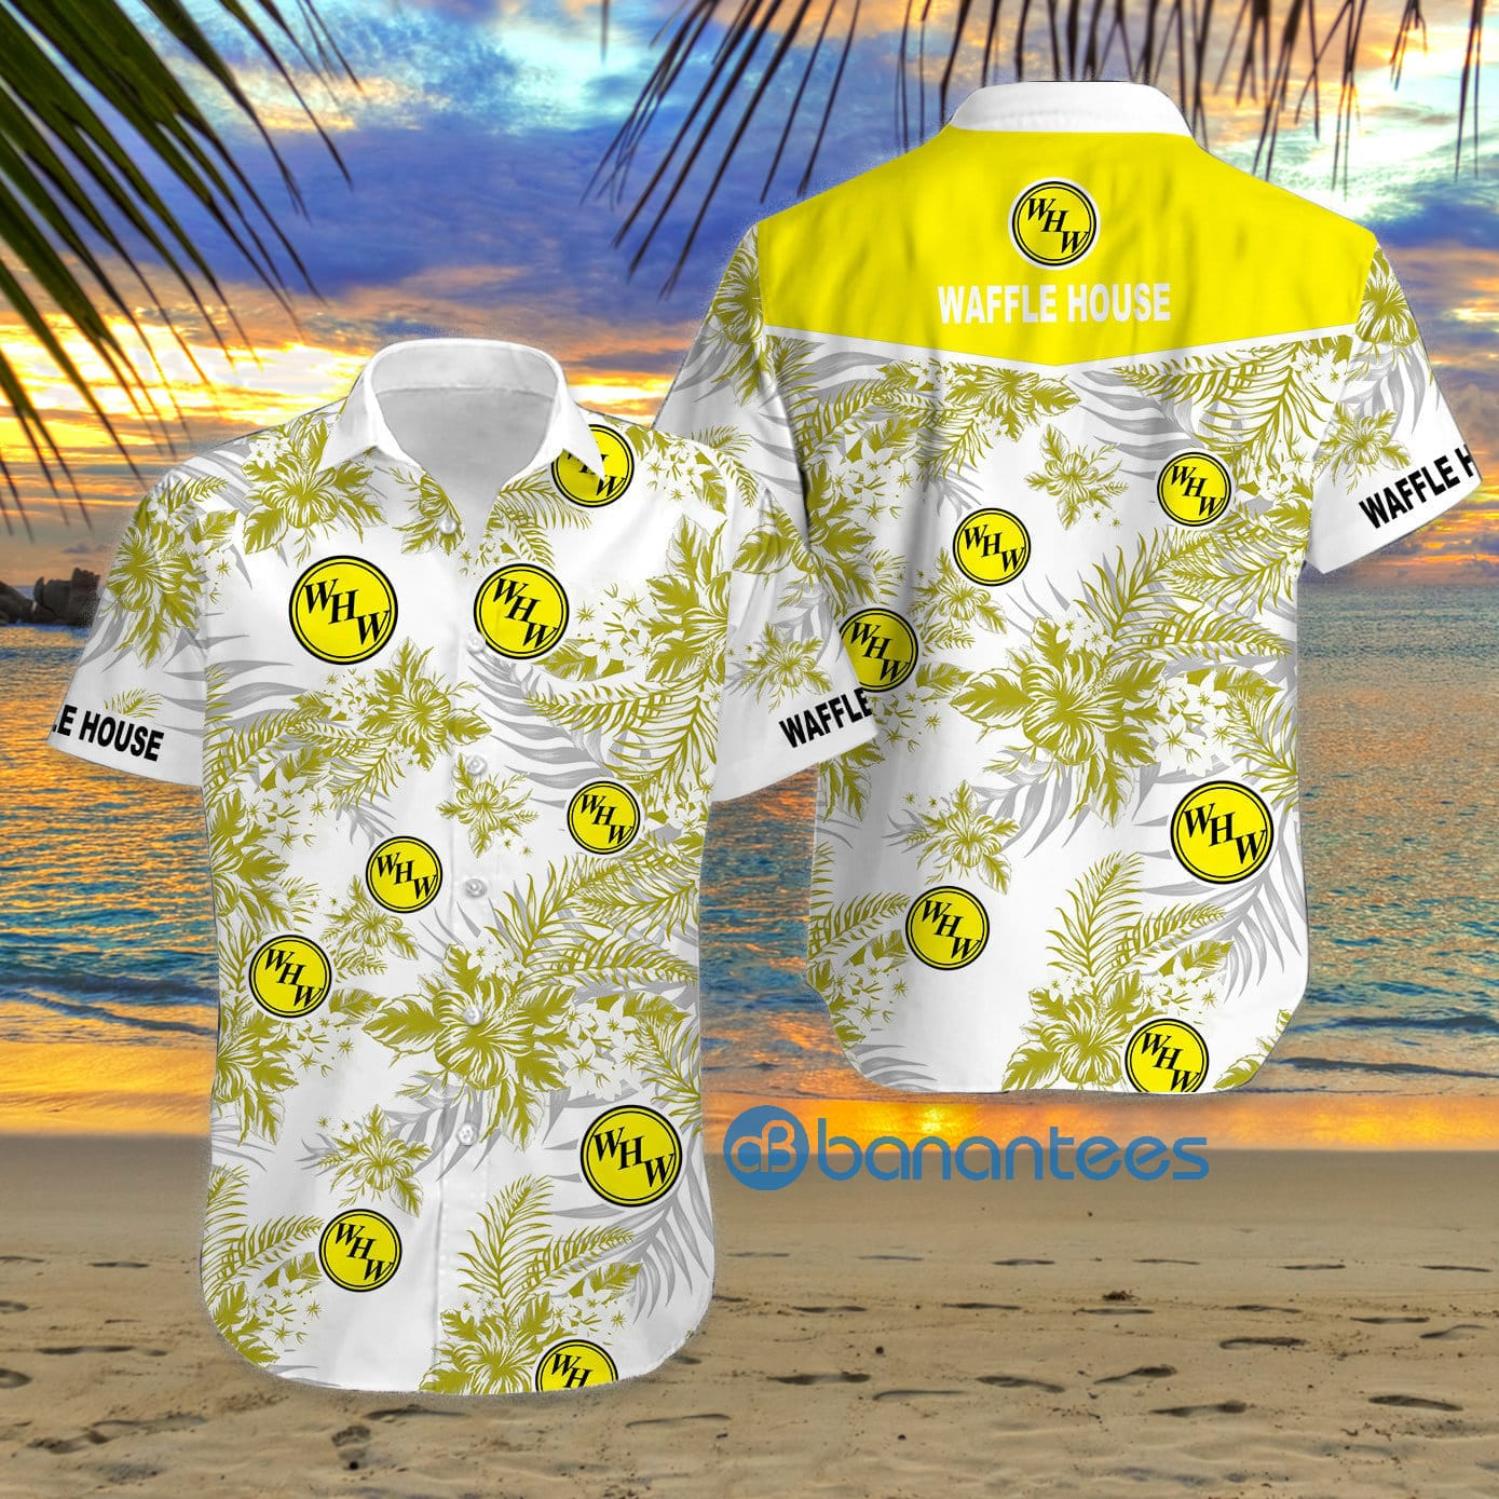 Custom Name waffle house Logo Hibiscus 3D Hawaiian Shirt Gift For Men Women  - Freedomdesign